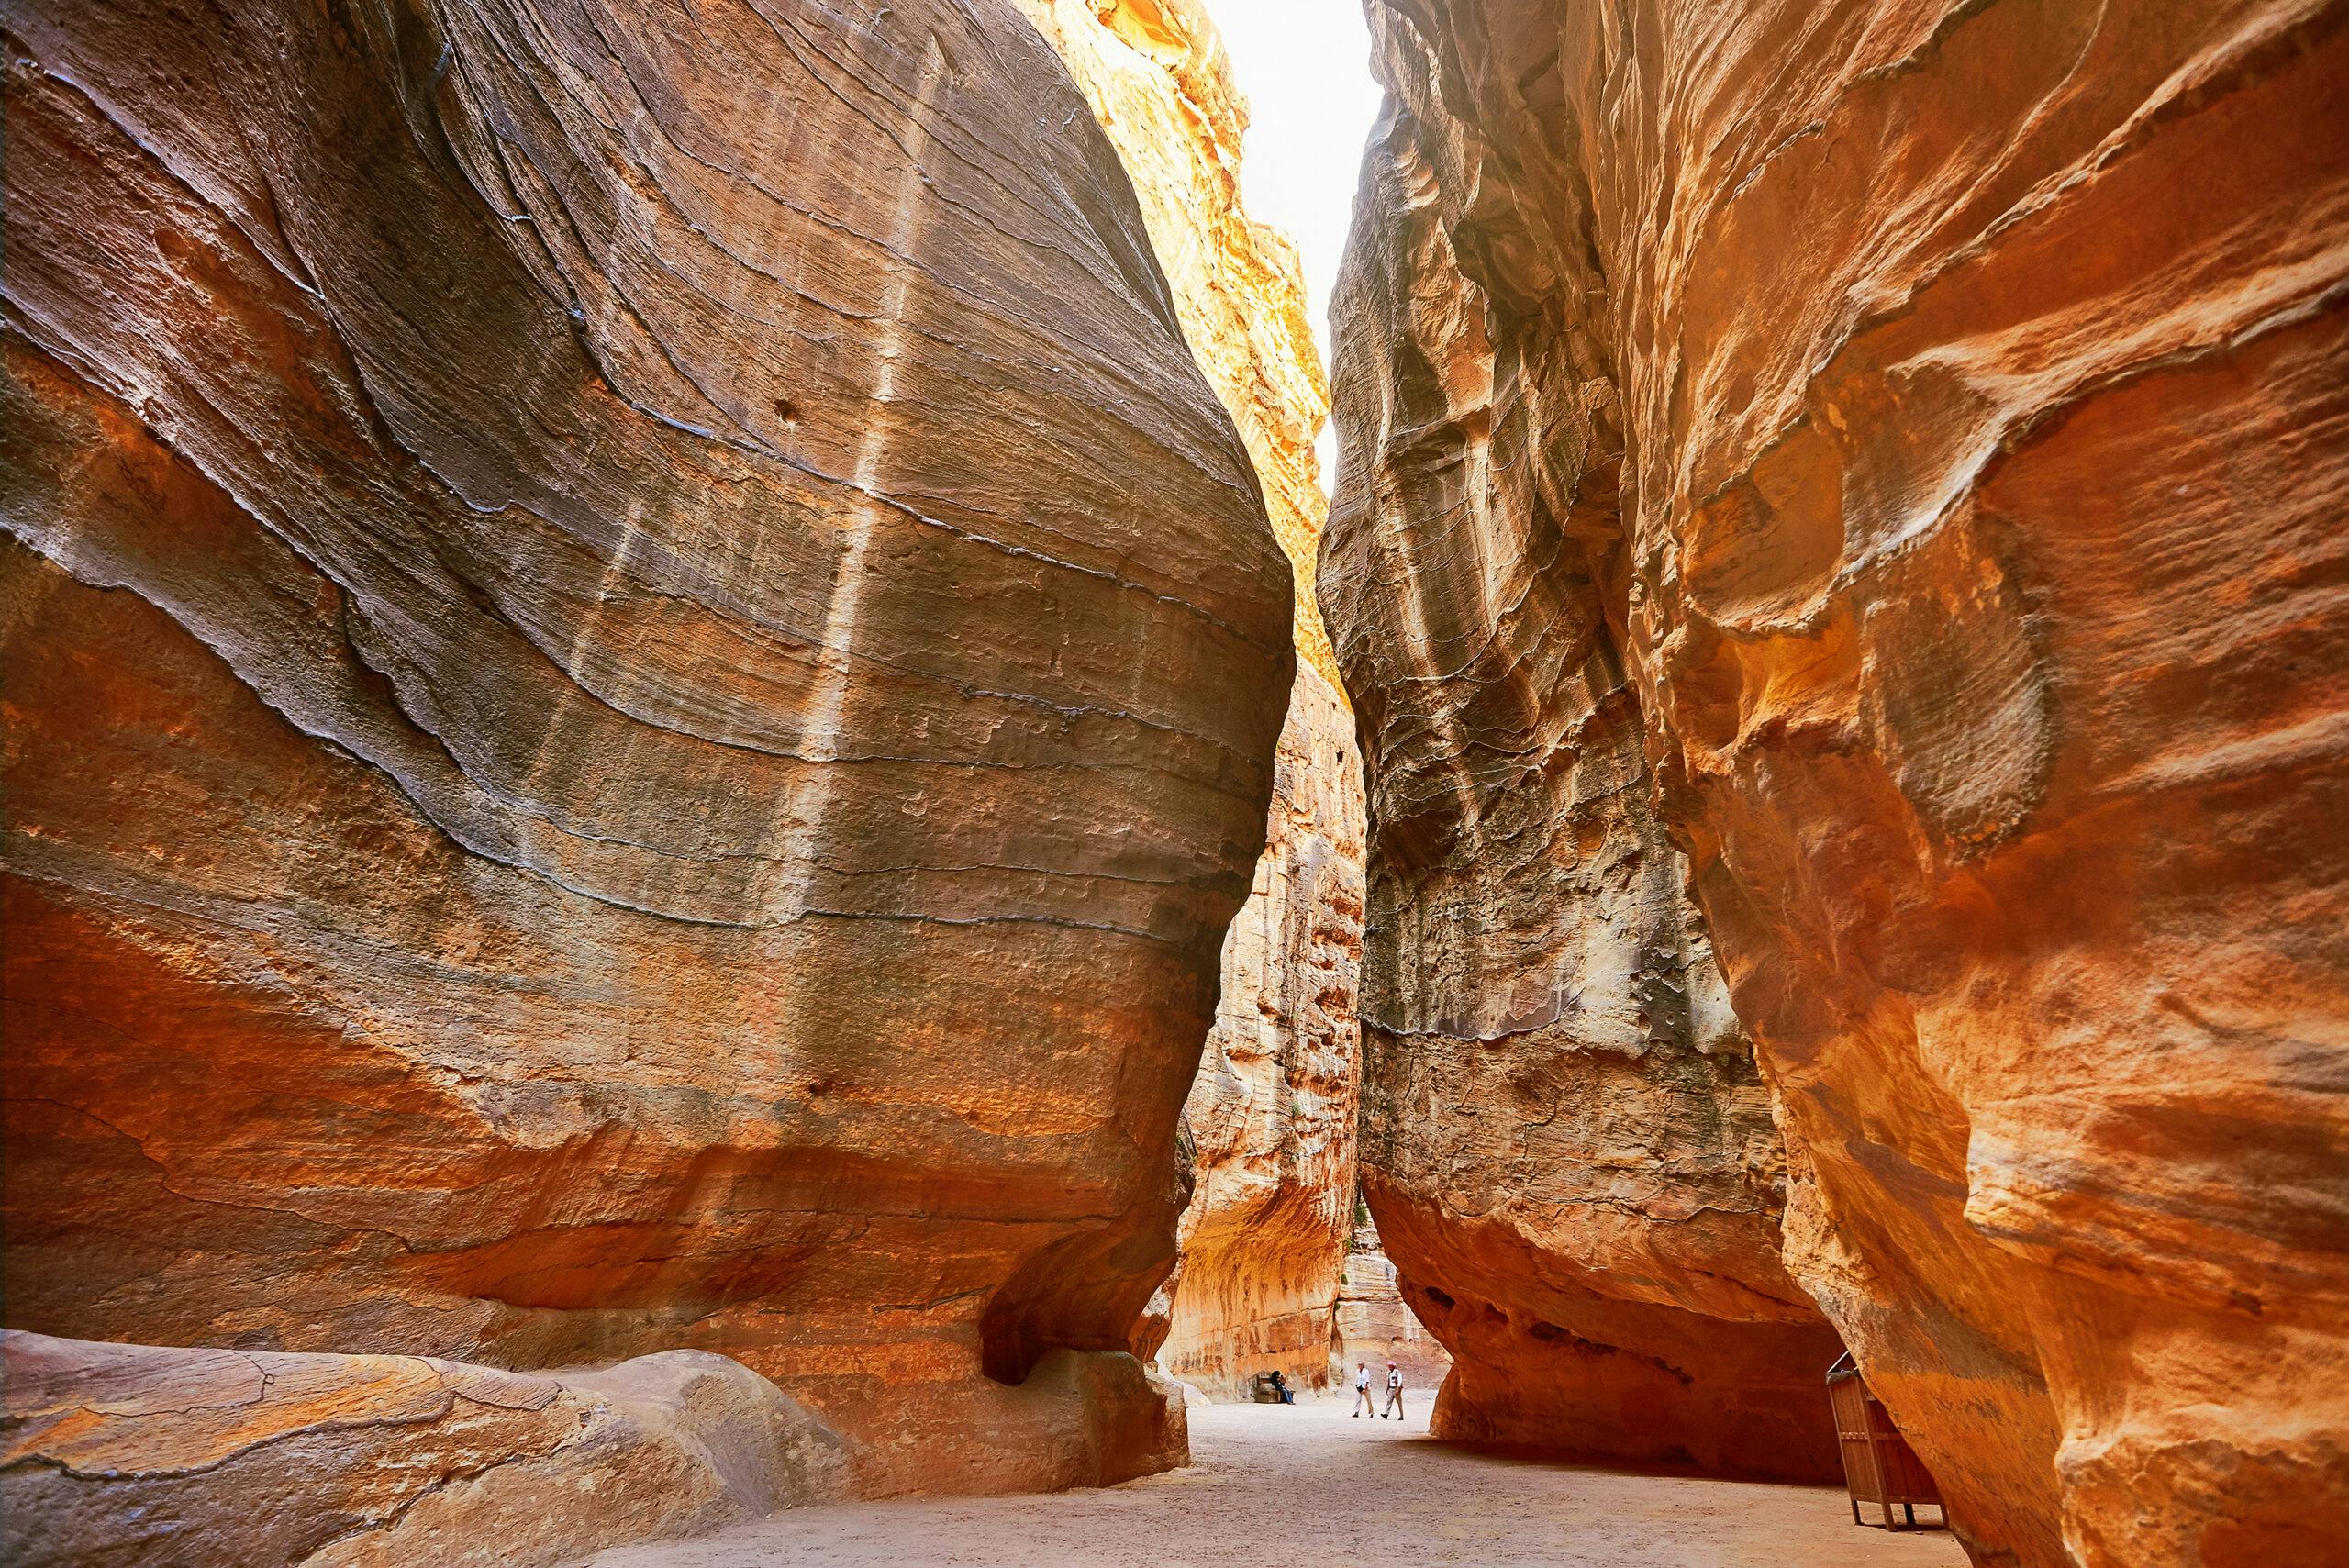 We're reimagining a fairer way to visit Jordan